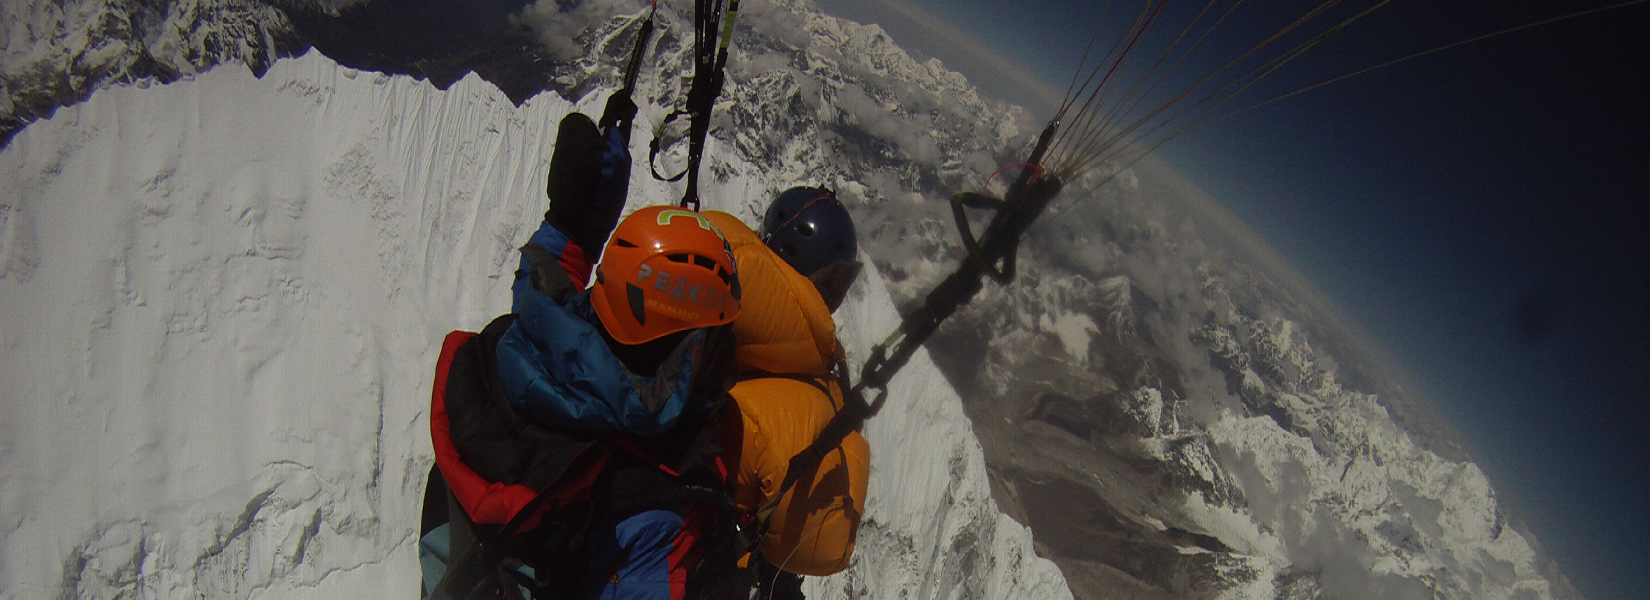 Les aventuriers de l'année 2012 : Sano Babu Sunuwar & Lapka Sherpa